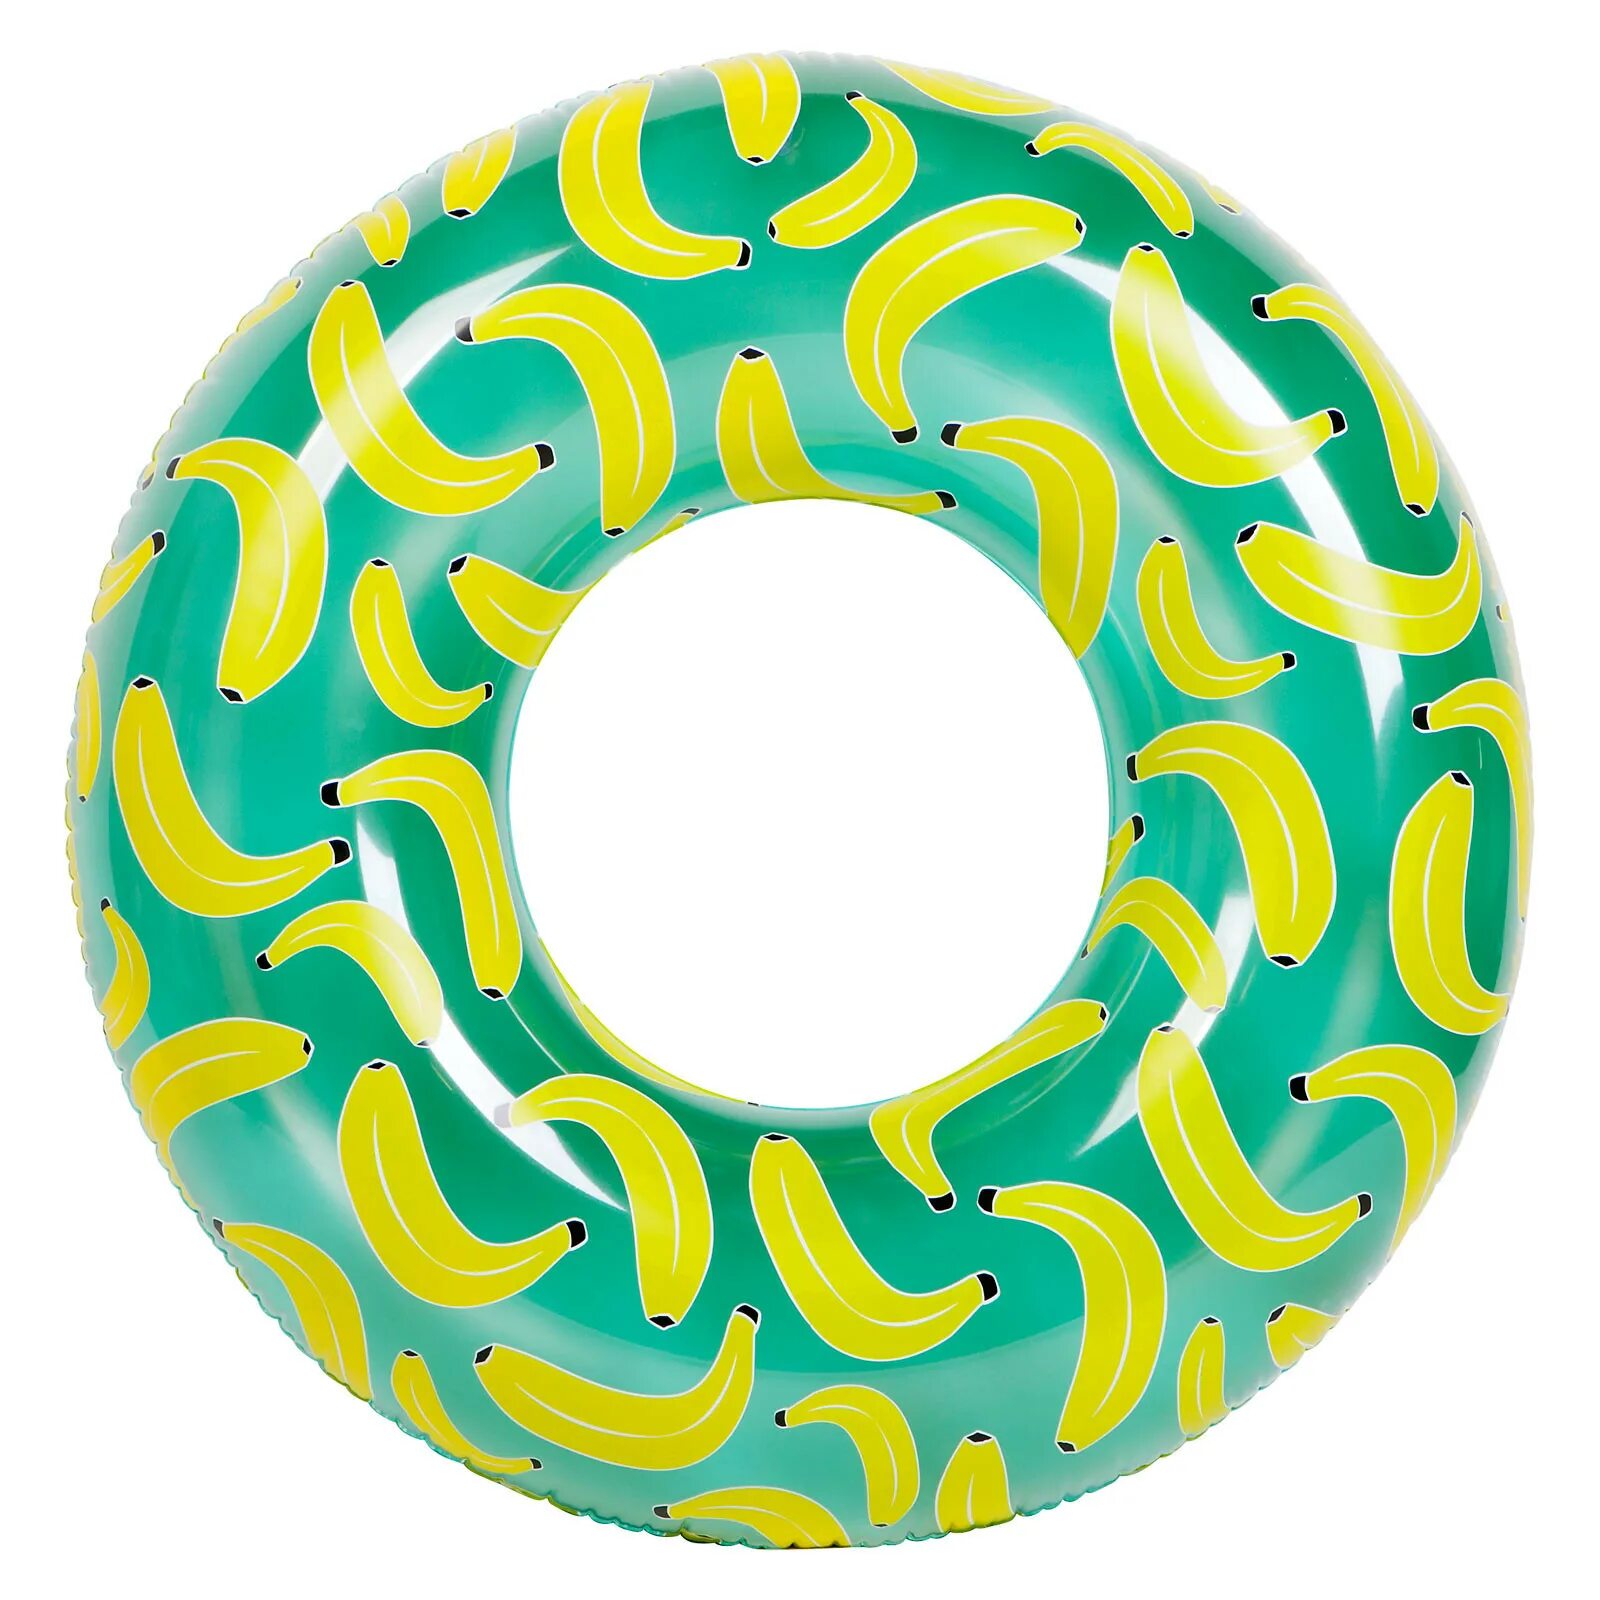 Круг для плавания. Надувной круг. Надувной круг для плавания. Надувной круг для взрослых. Надувной круг на воде